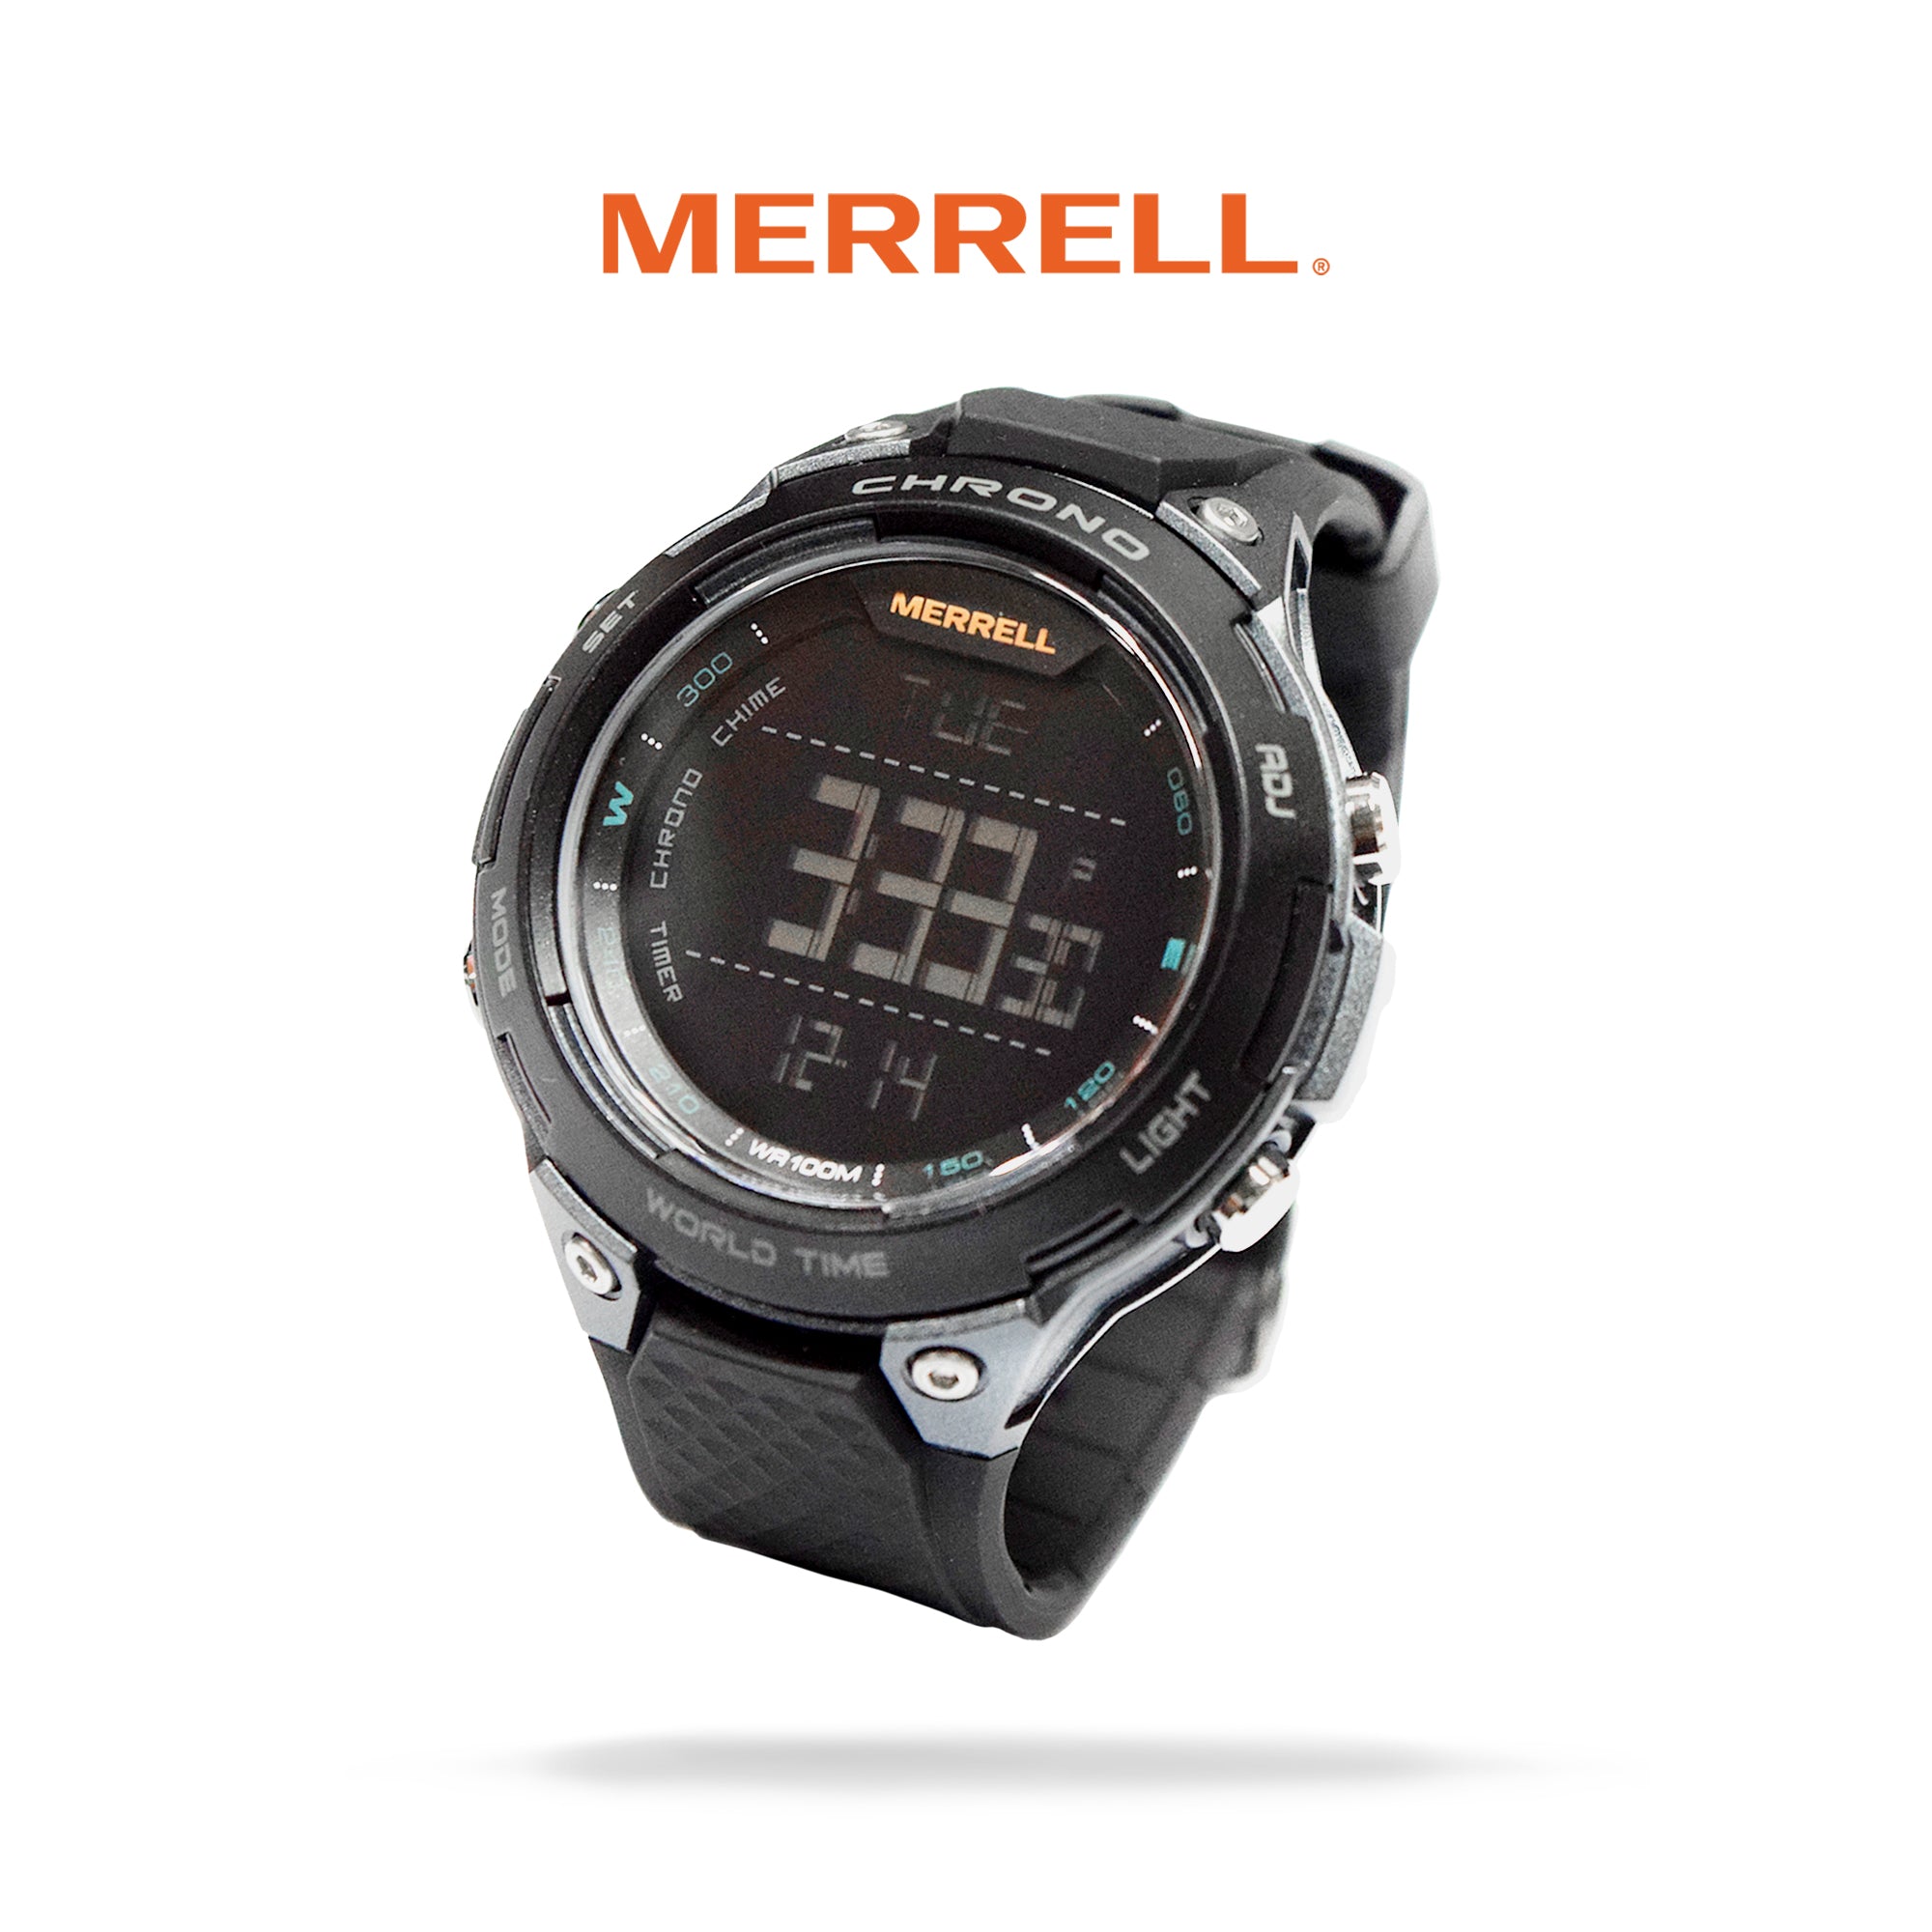 Merrell Watch - Black * GWP ONLY *